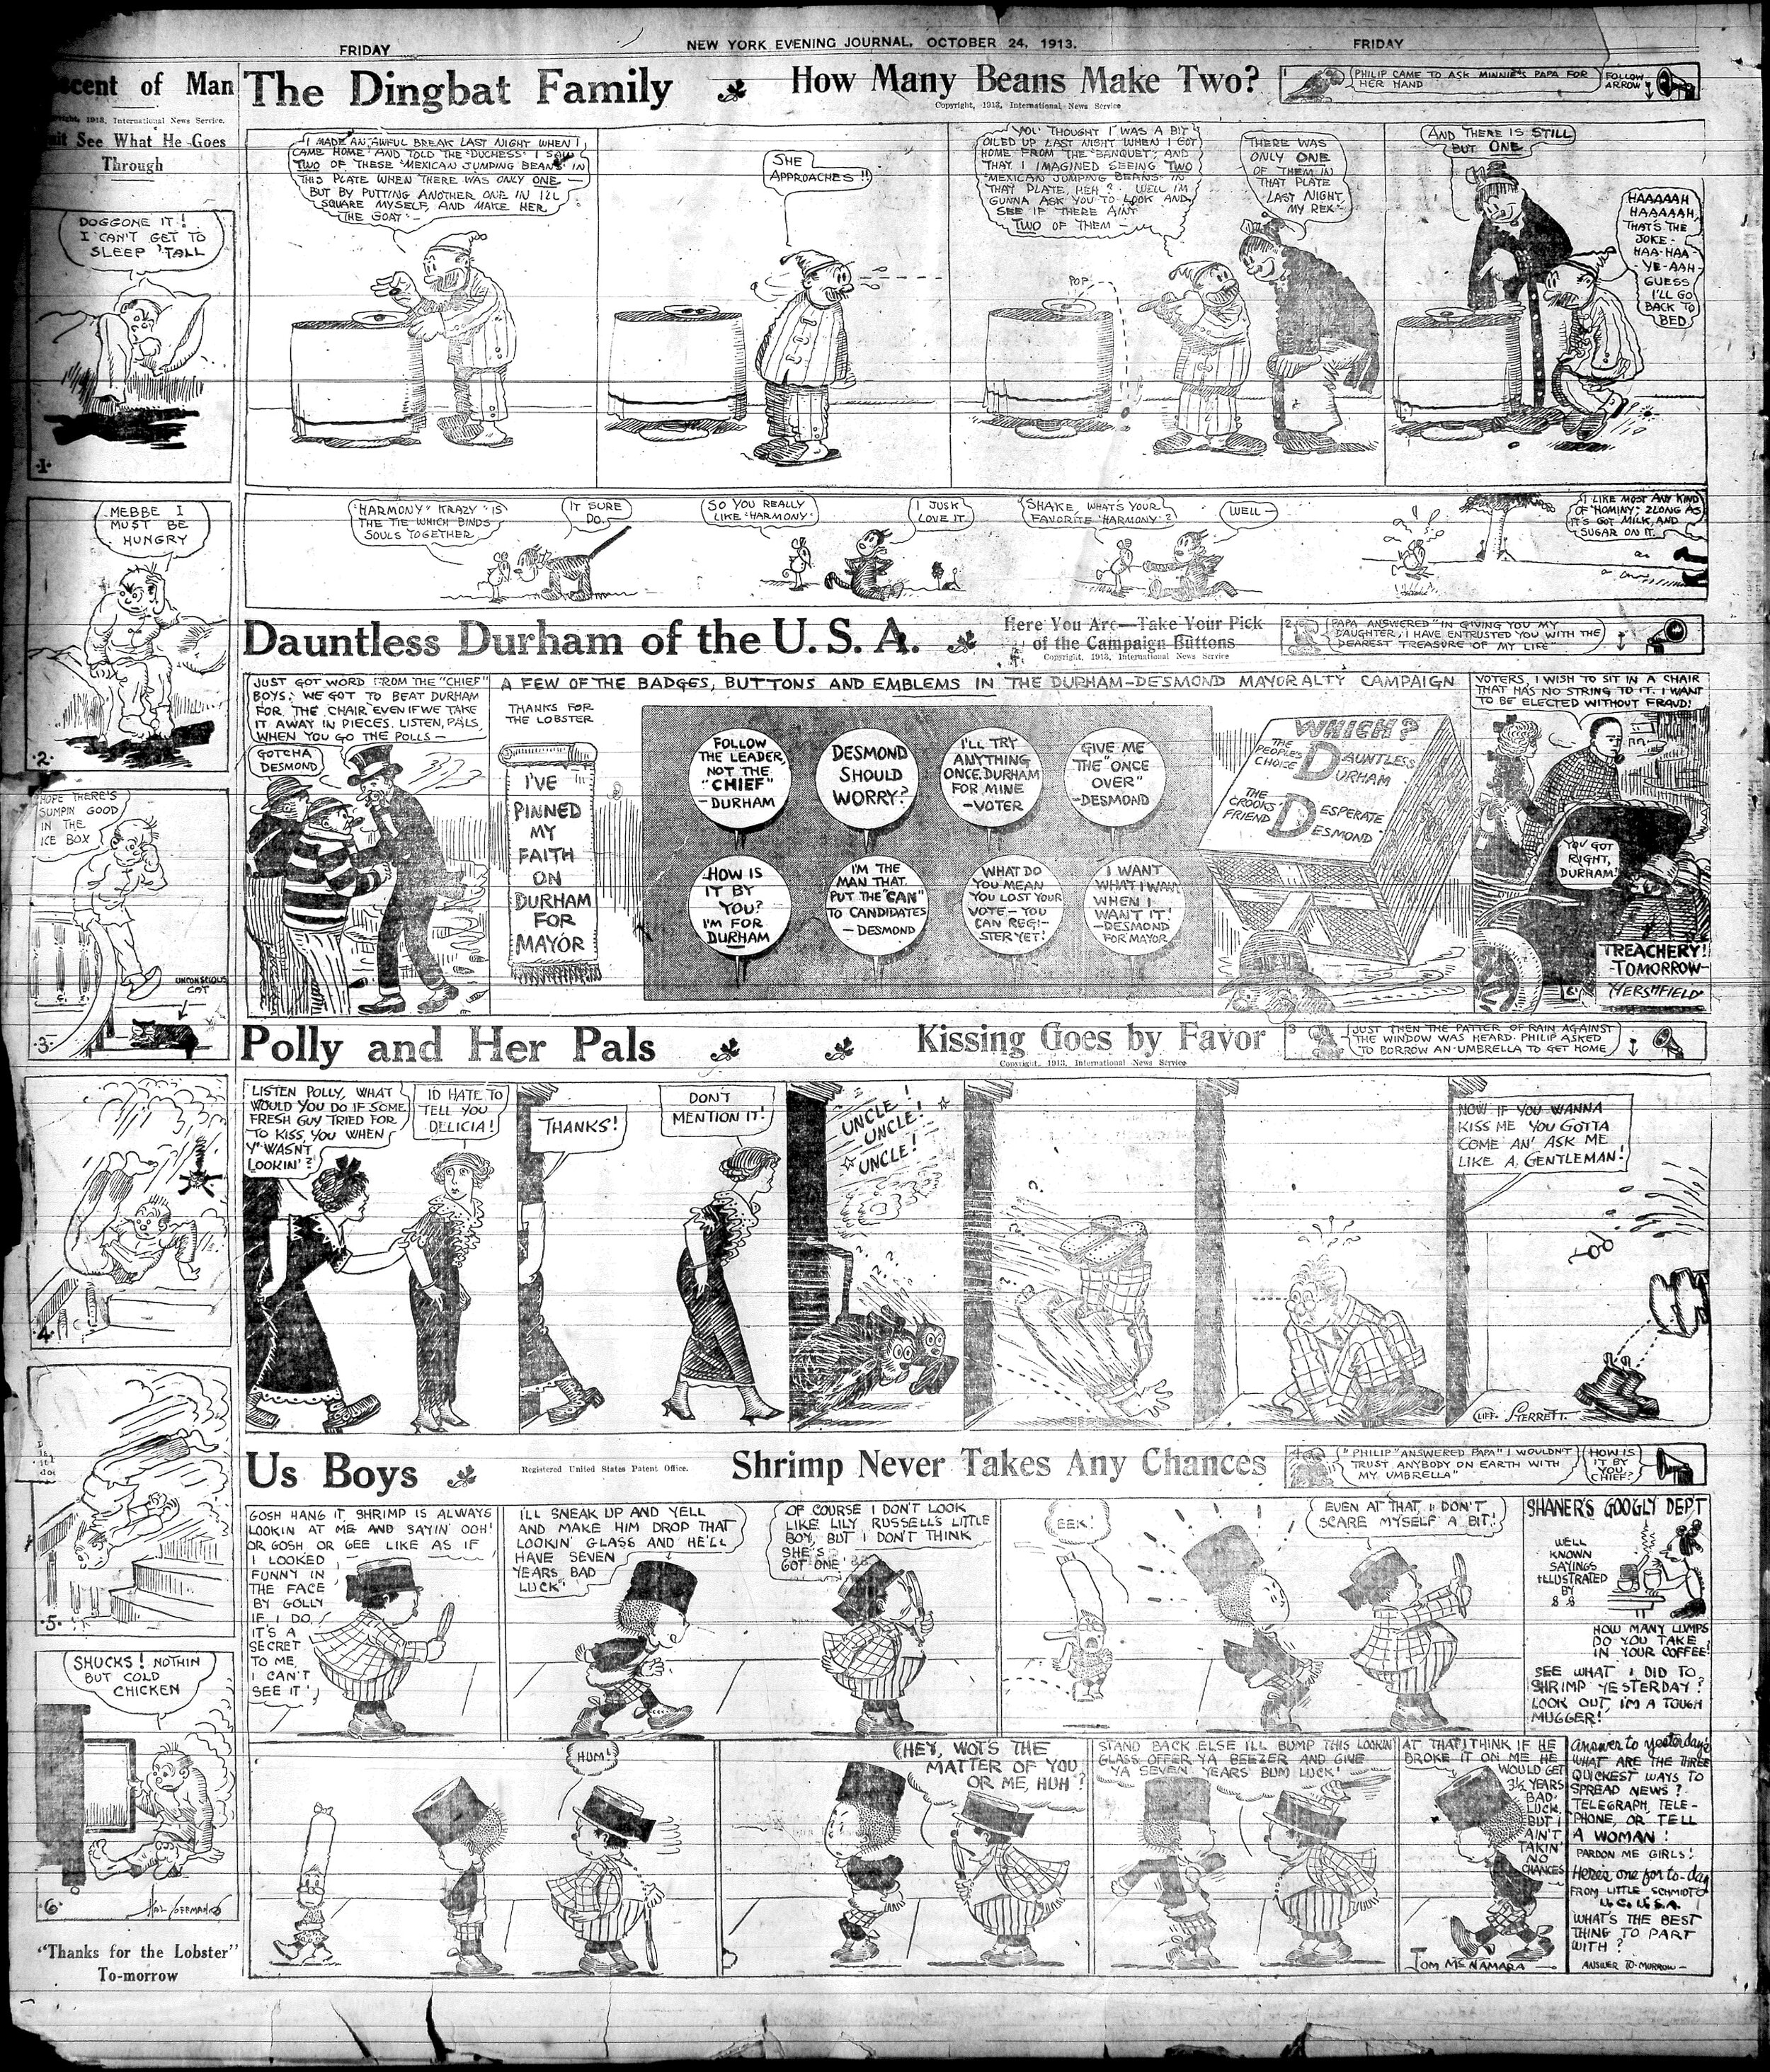 13-nyej-10-24-1913-comics-page-.jpg